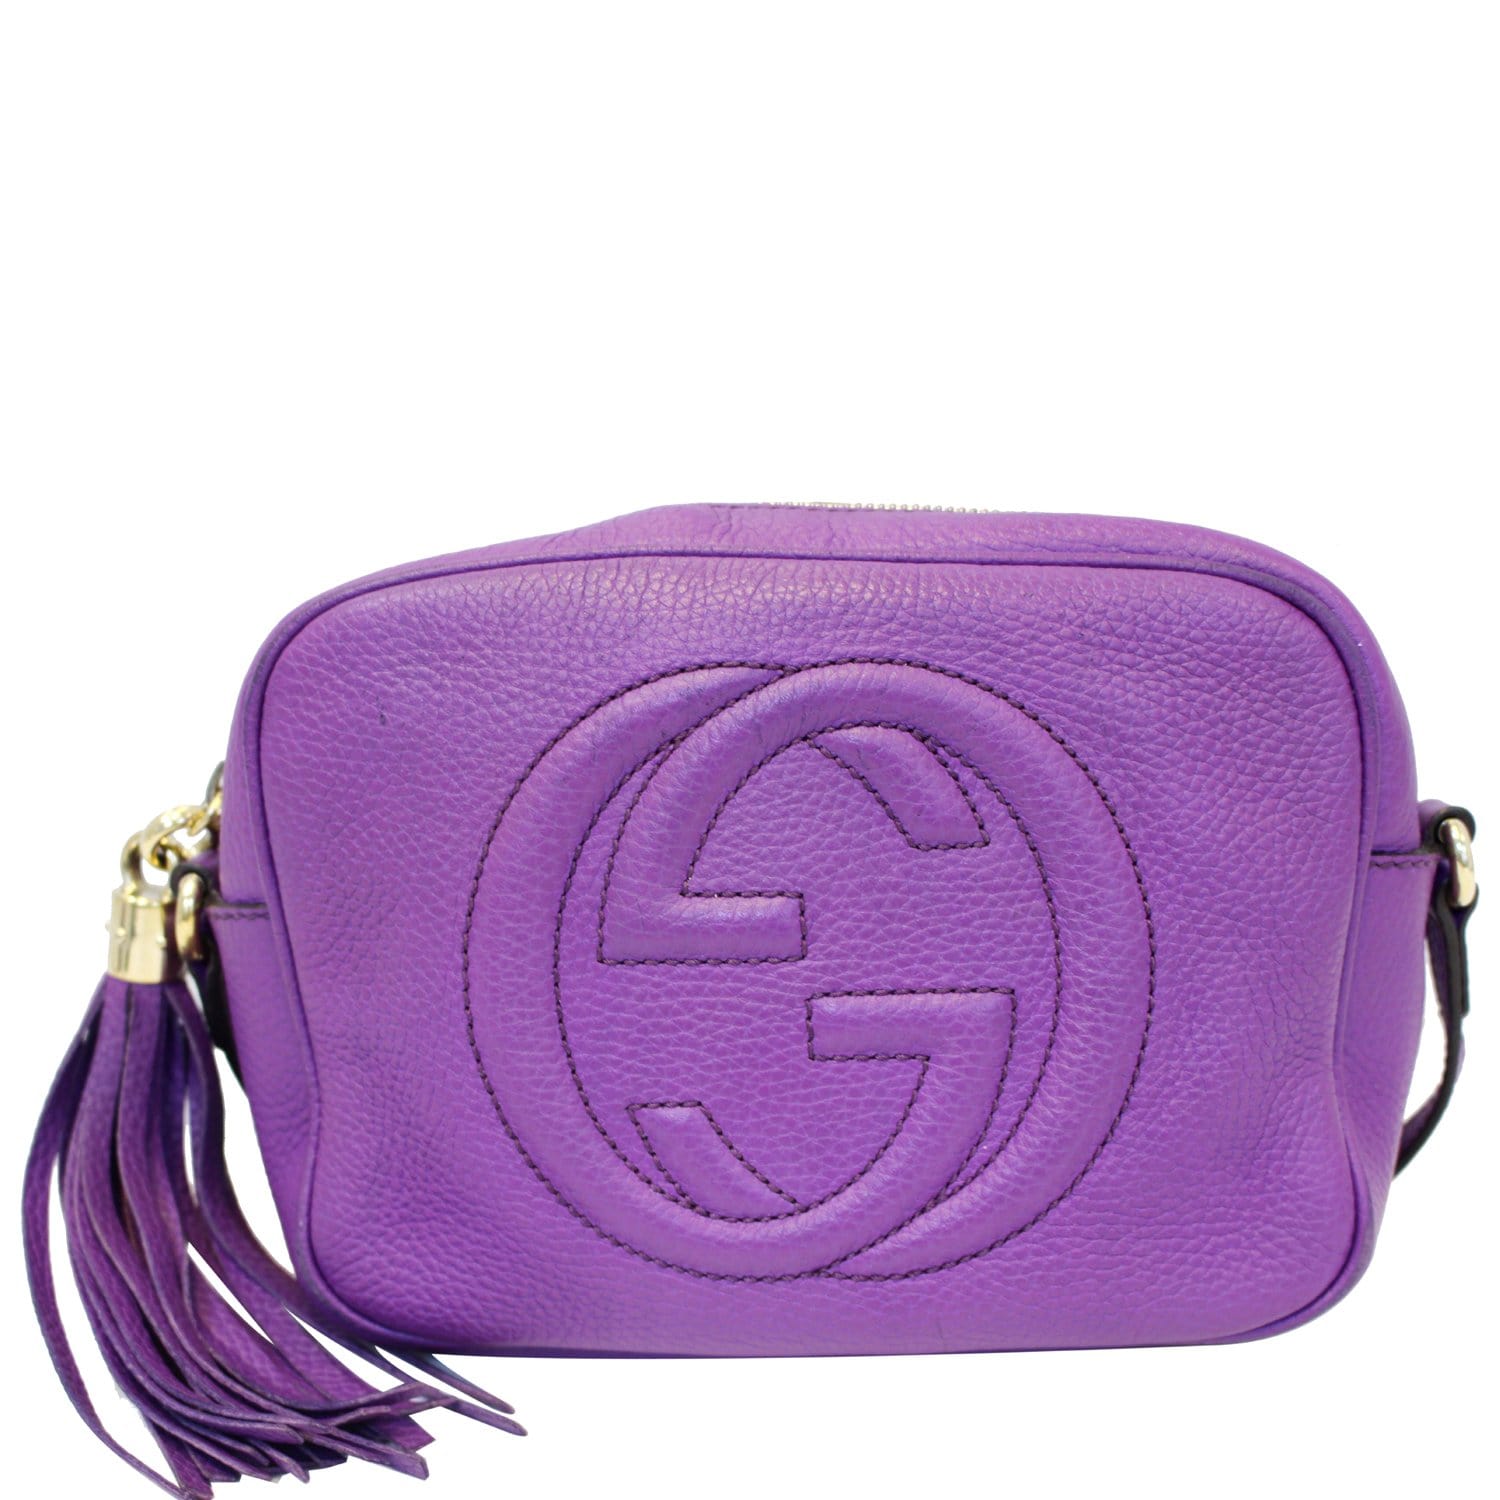 Gucci Purple Pebbled Leather Medium Soho Tote Gucci